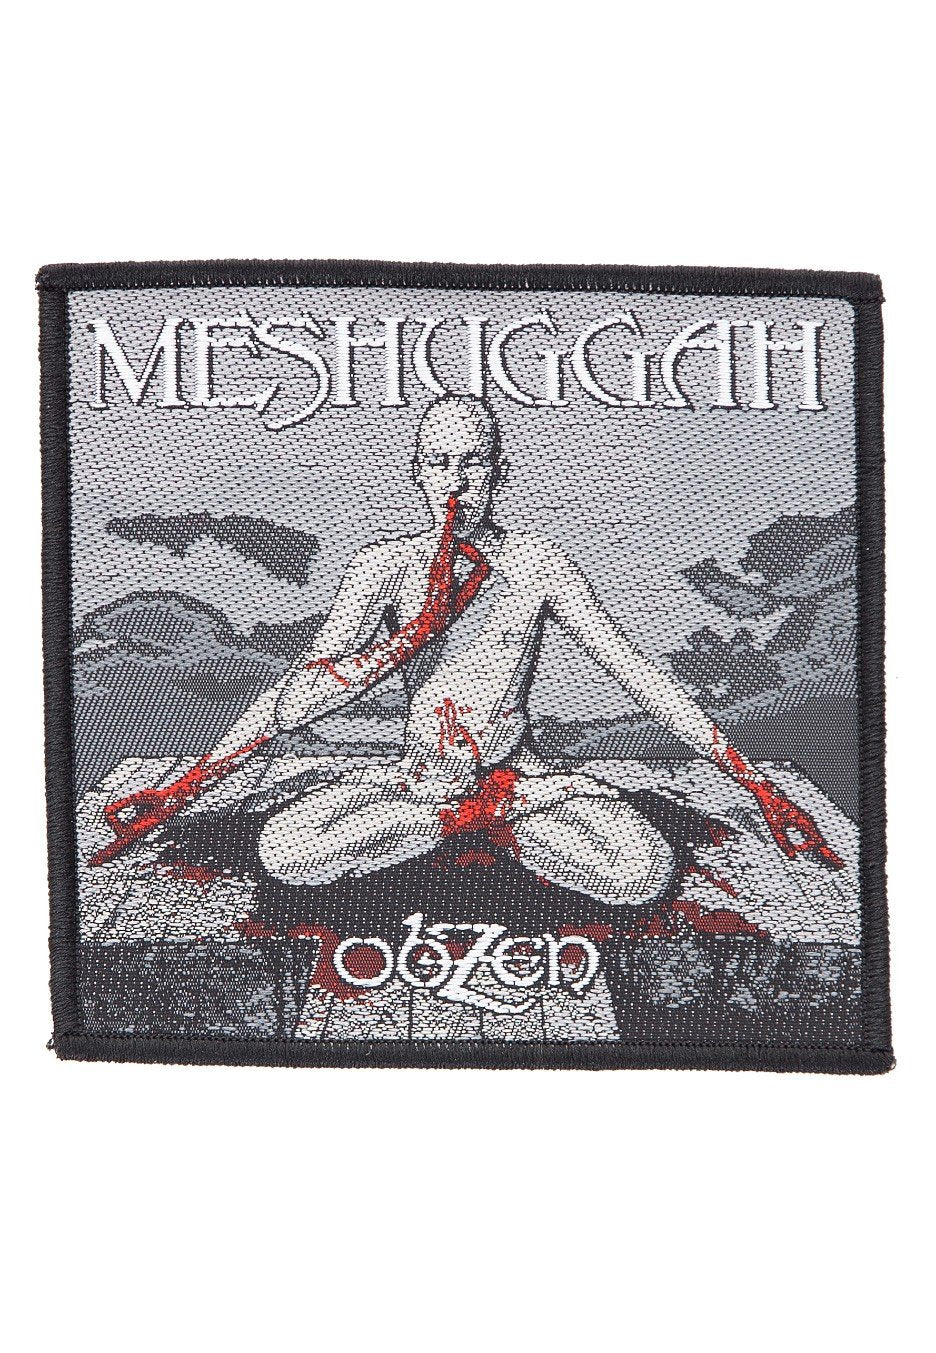 Meshuggah - Obzen - Patch